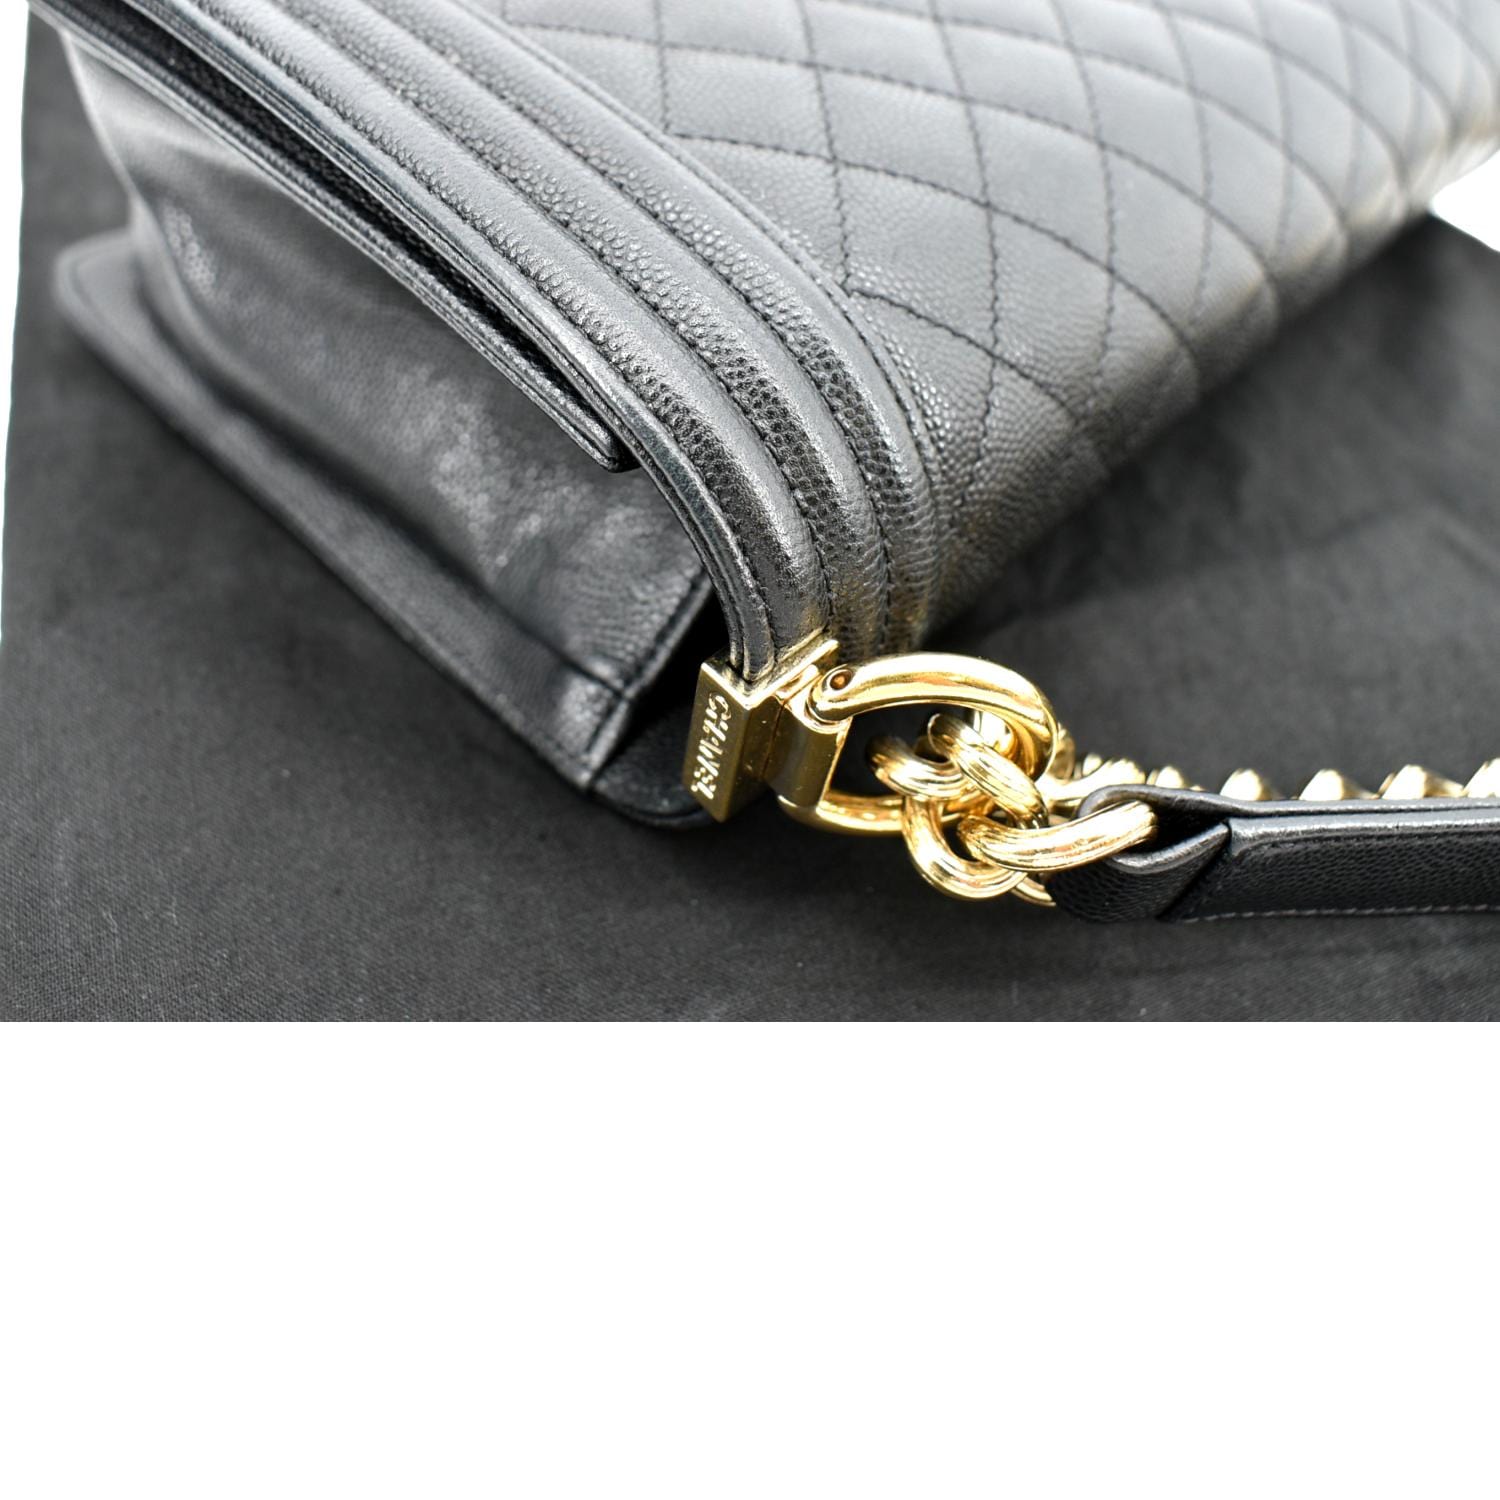 caviar chanel handbag new